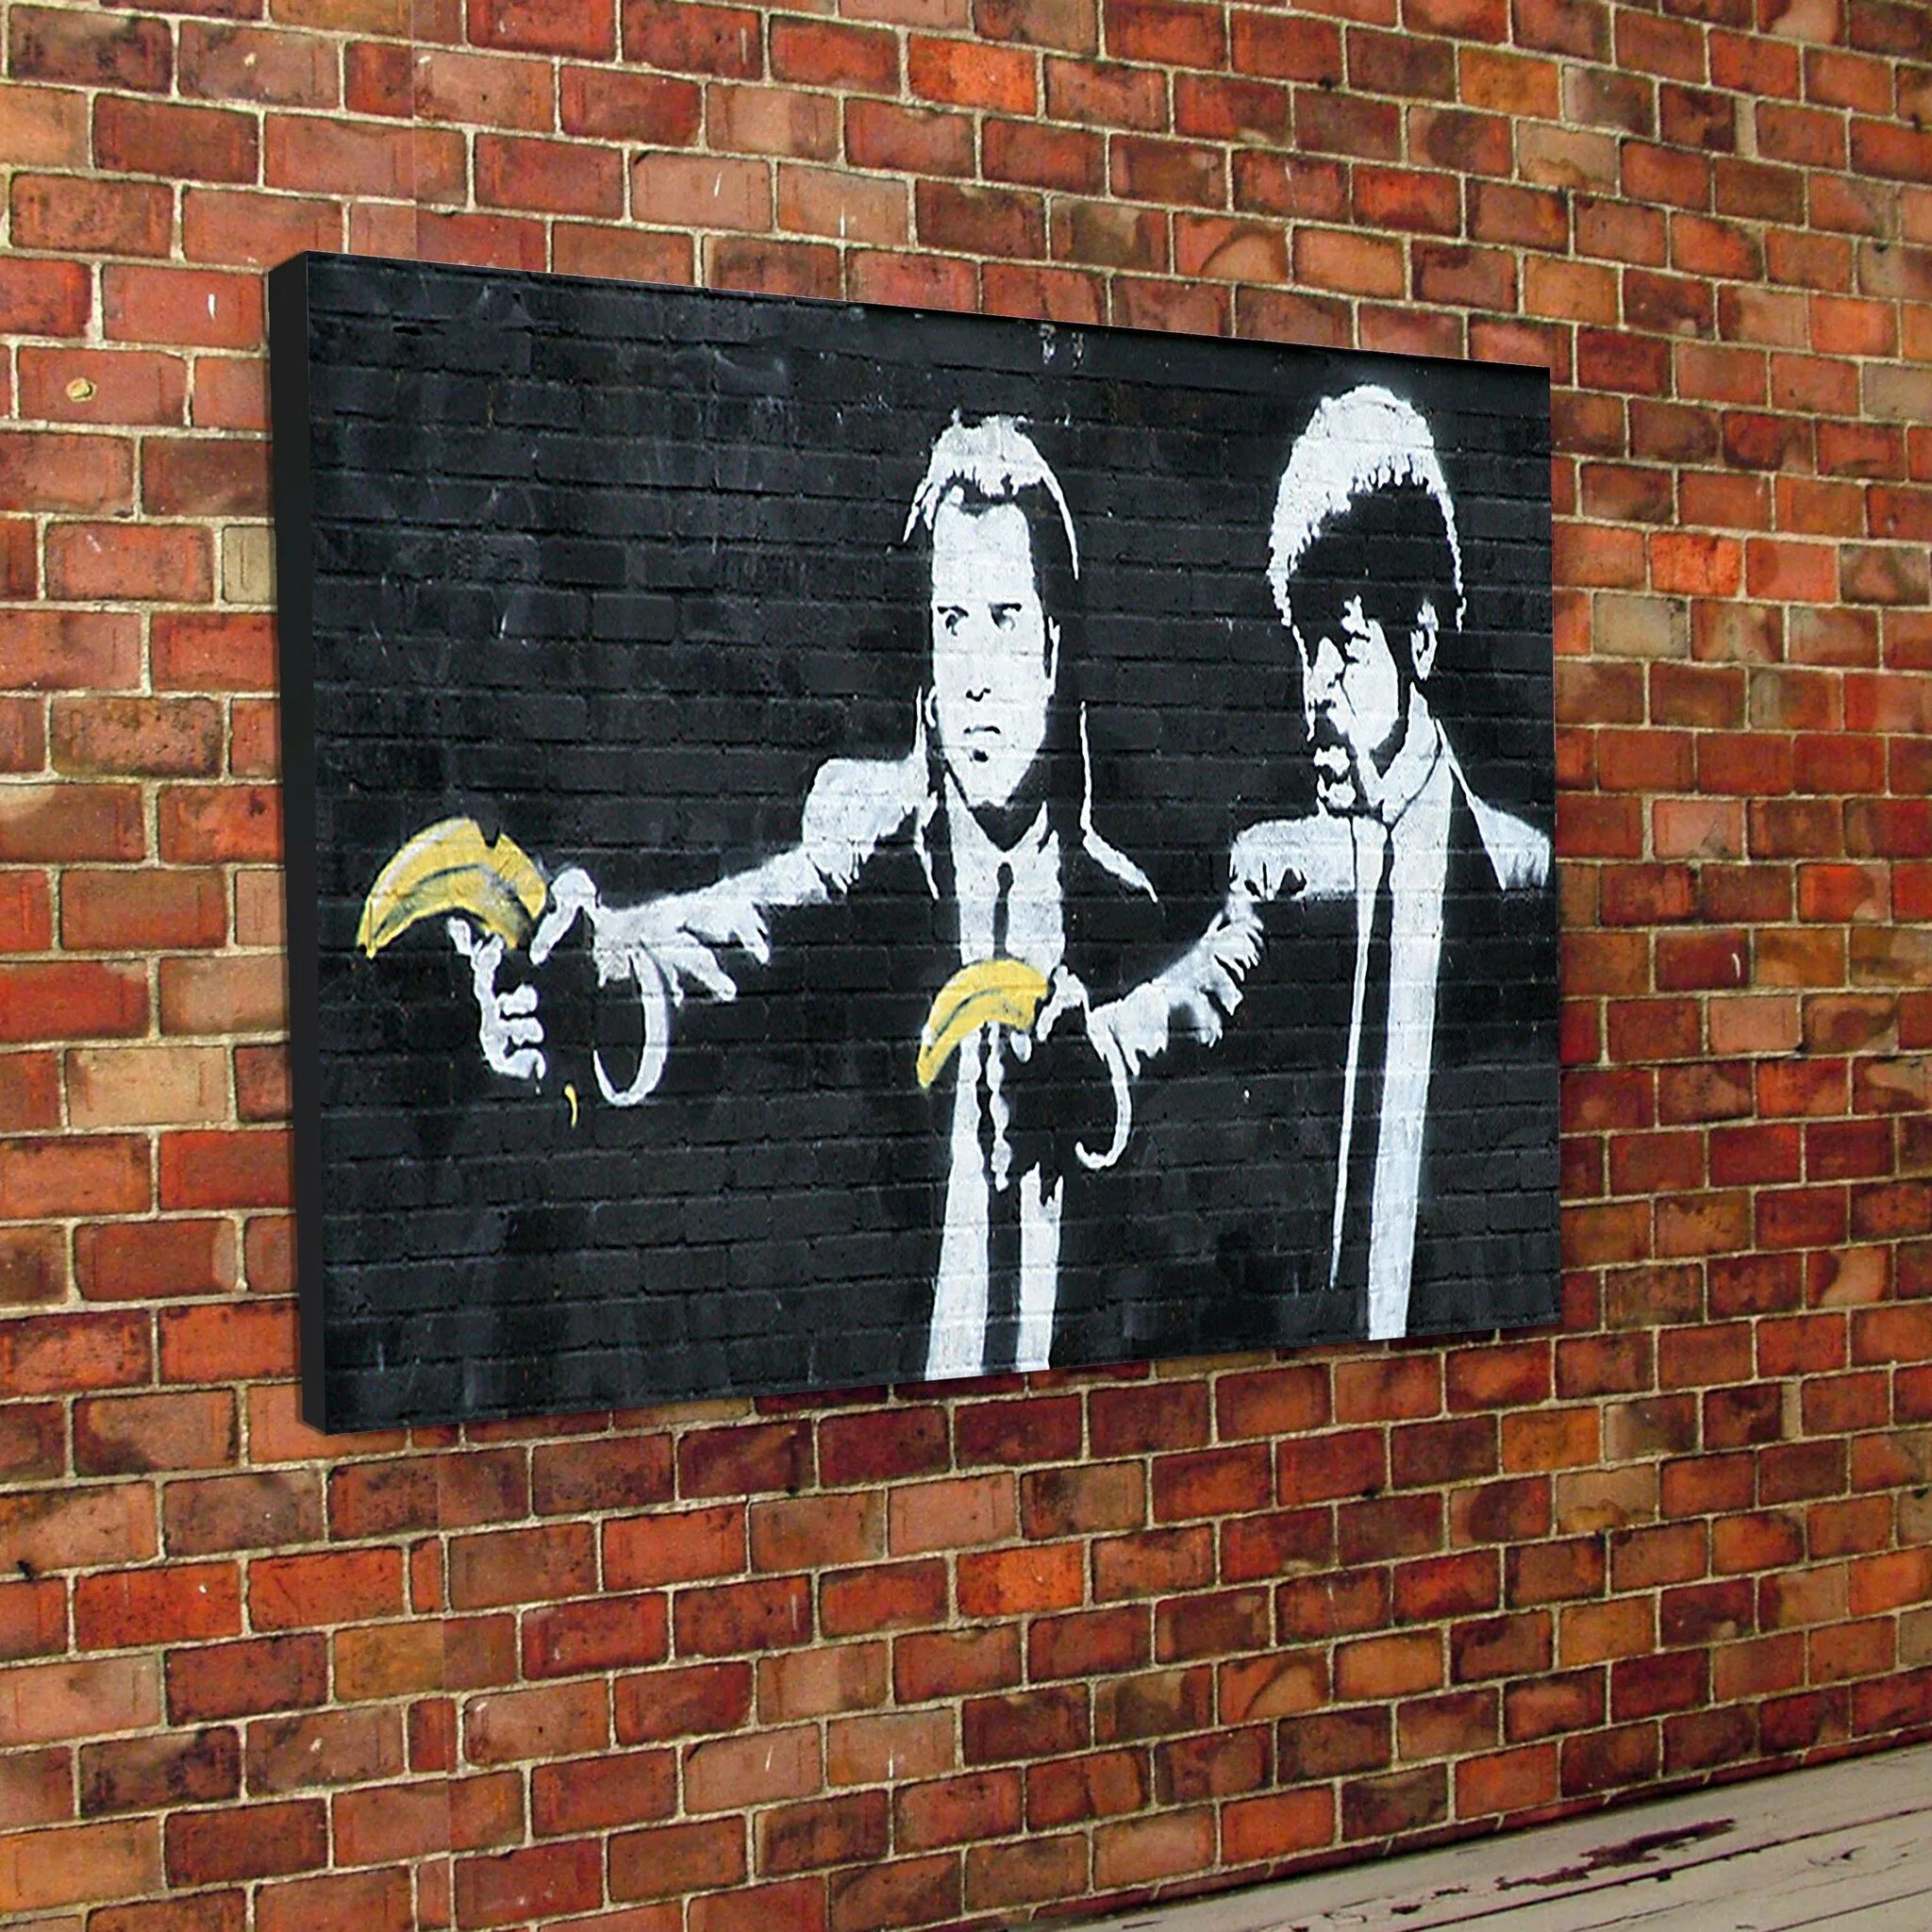 Banksy Graffiti Криминальное чтиво. Бэнкси Джон Траволта. Бэнкси художник Криминальное чтиво. Бэнкси — английский андеграундный художник. Искусство бэнкси